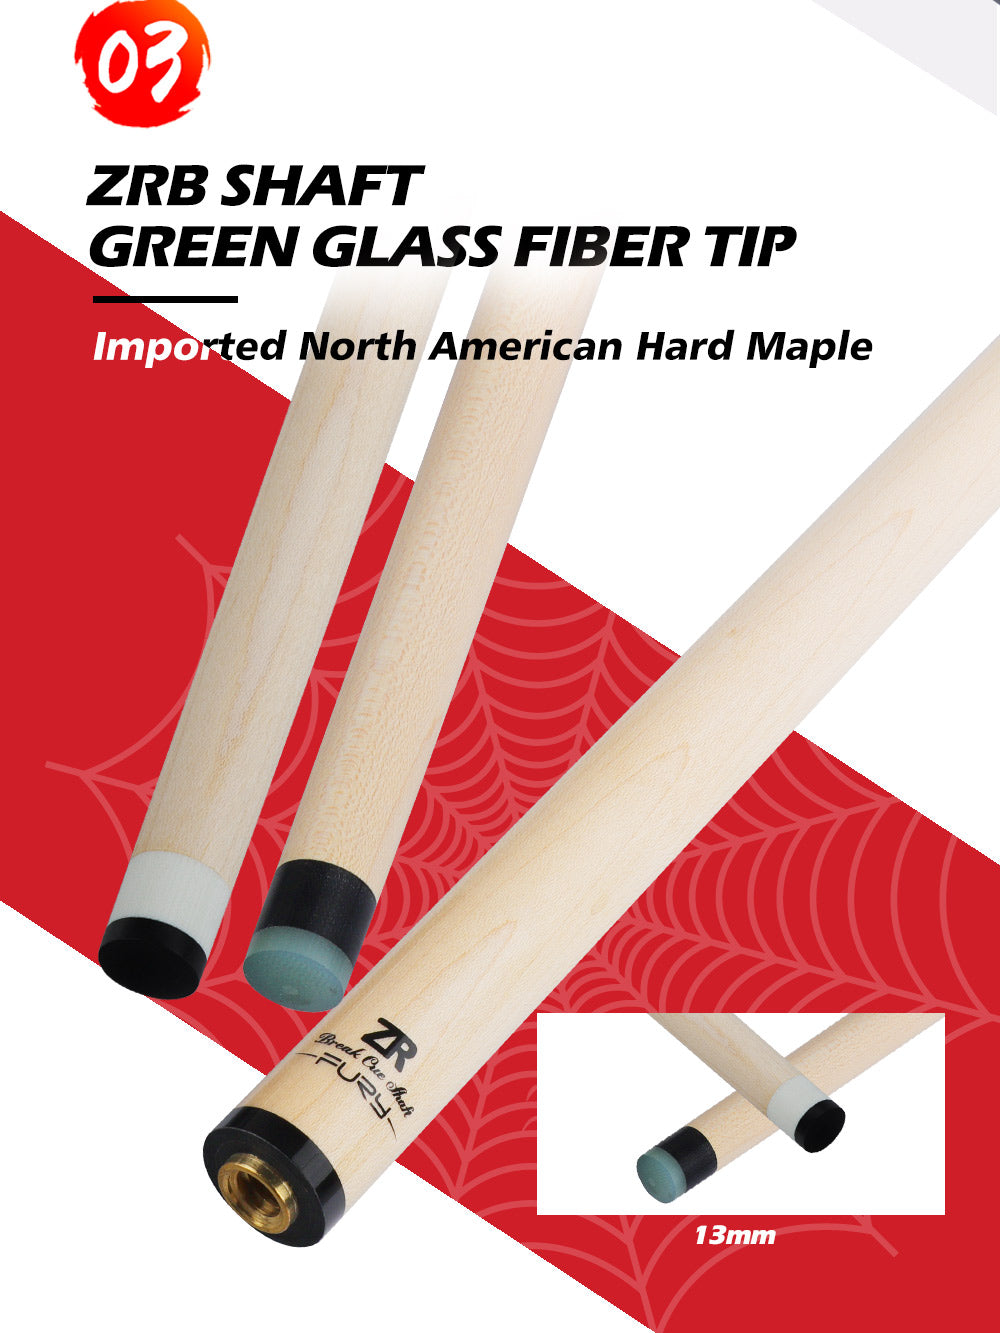 FURY BK Series Billiard Break Cue 13mm Green Glass Fiber Tip ZRB Half Technology Shaft Speed-Loc Joint Punch Cue Stick Kit